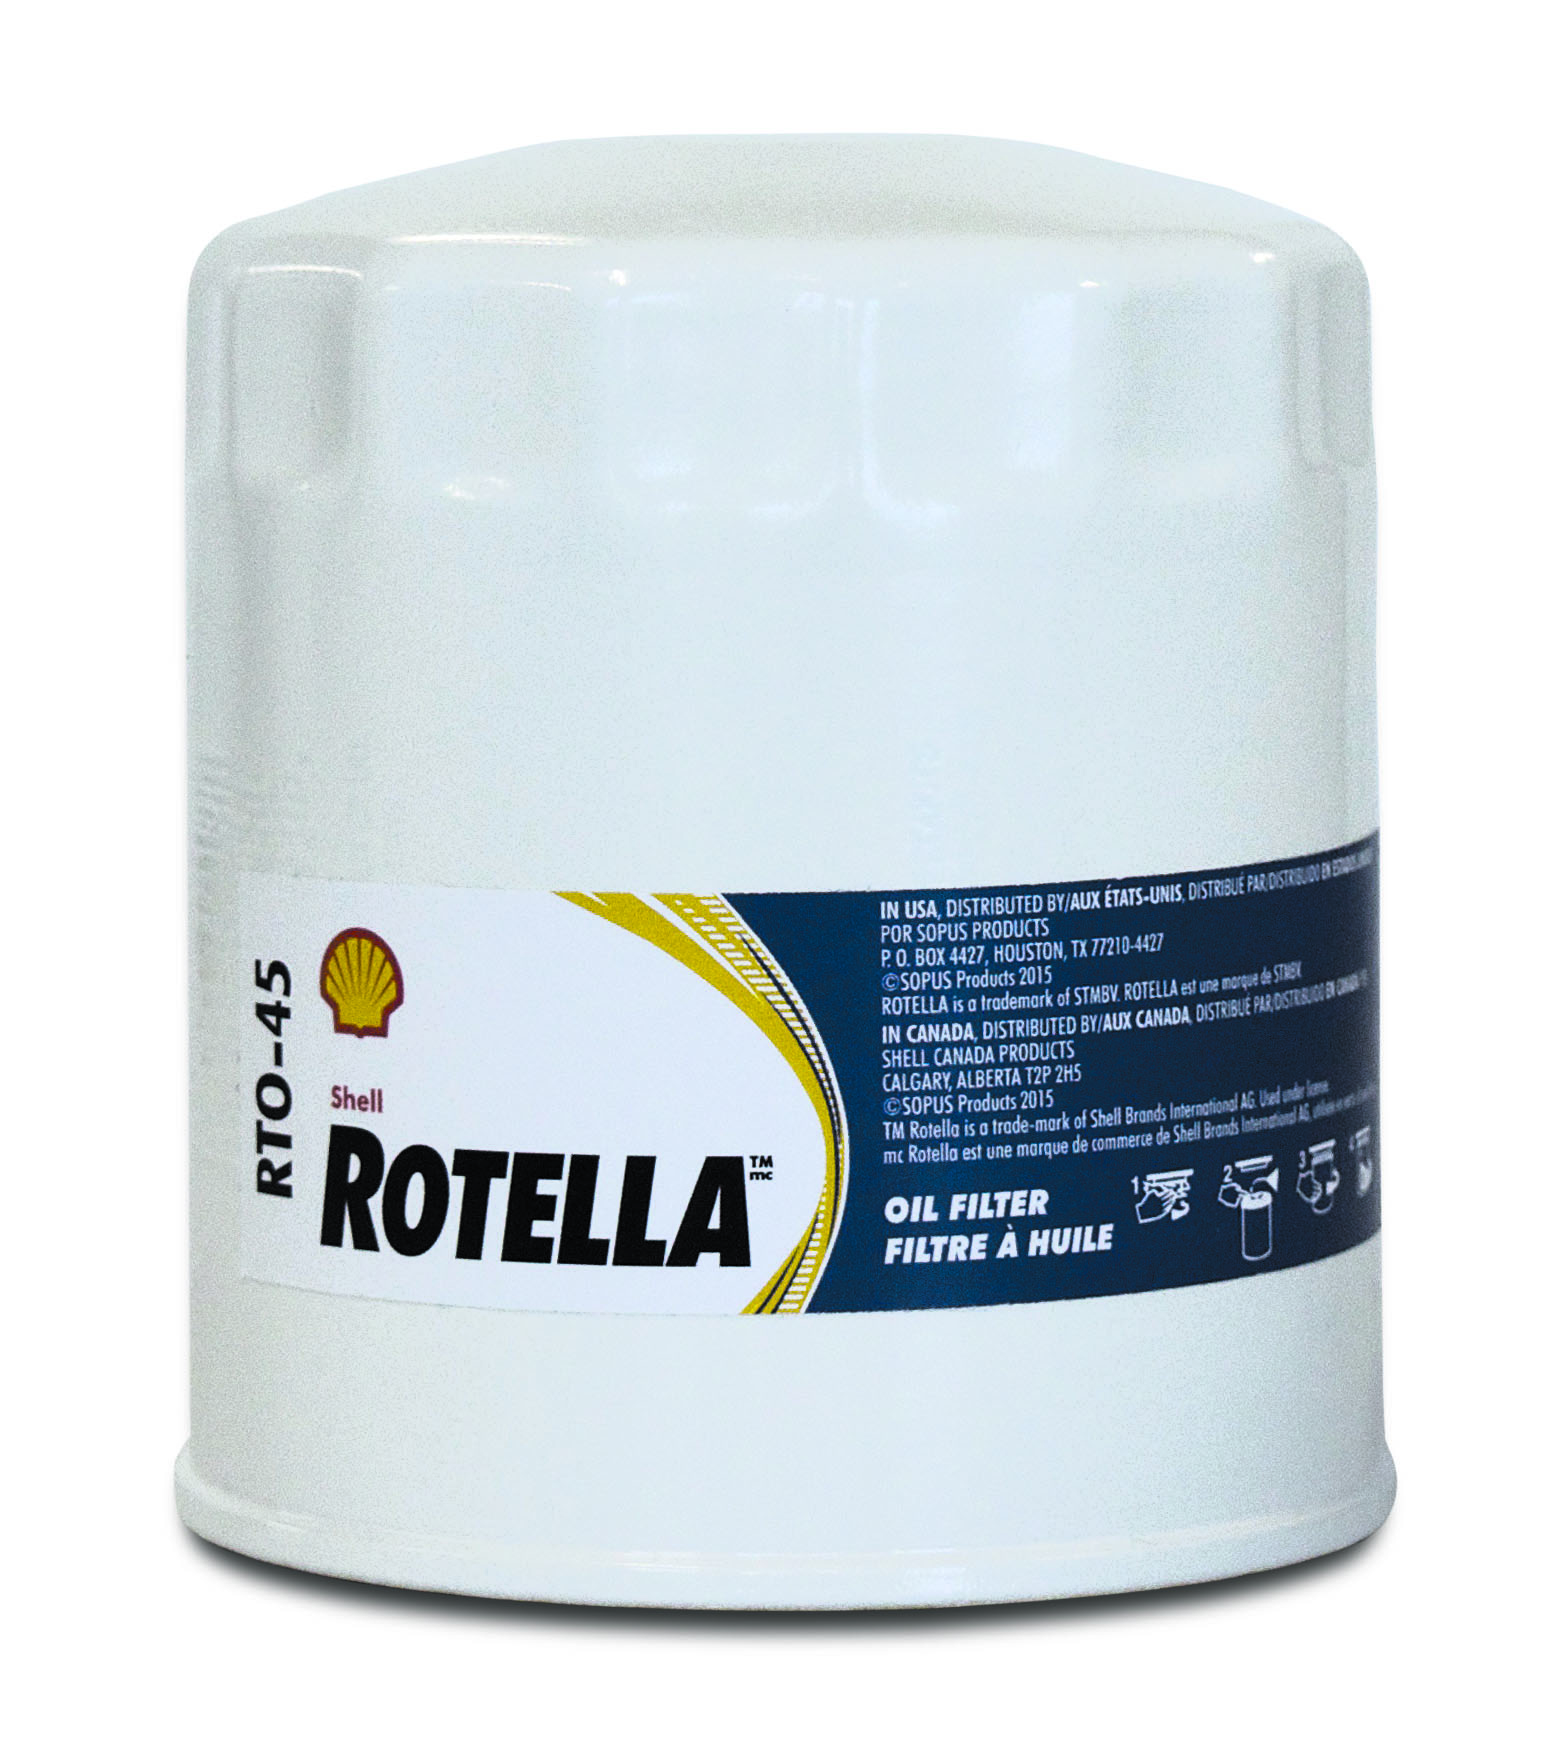 Shell Rotella Oil Filter